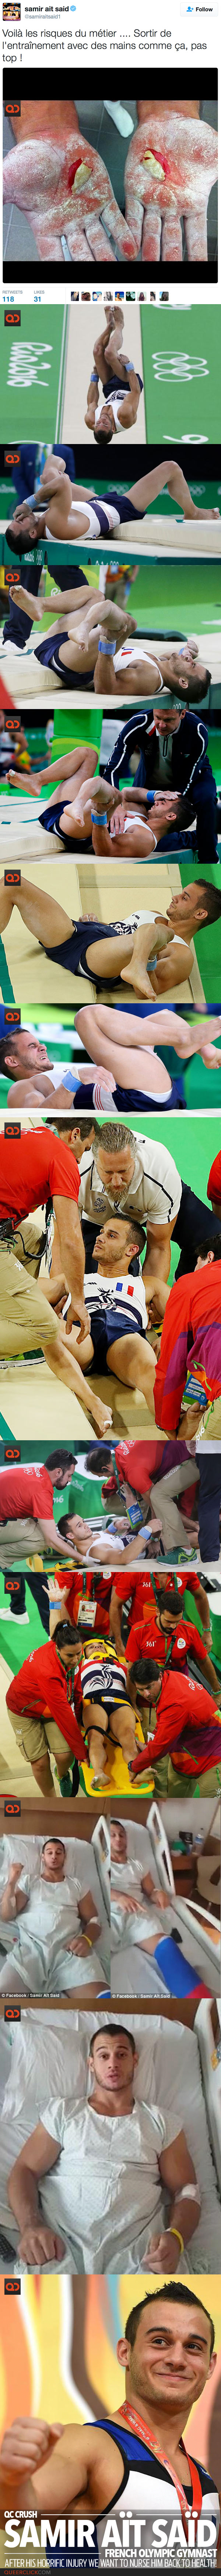 QC Crush: French Olympic Gymnast Samir Aït Saïd